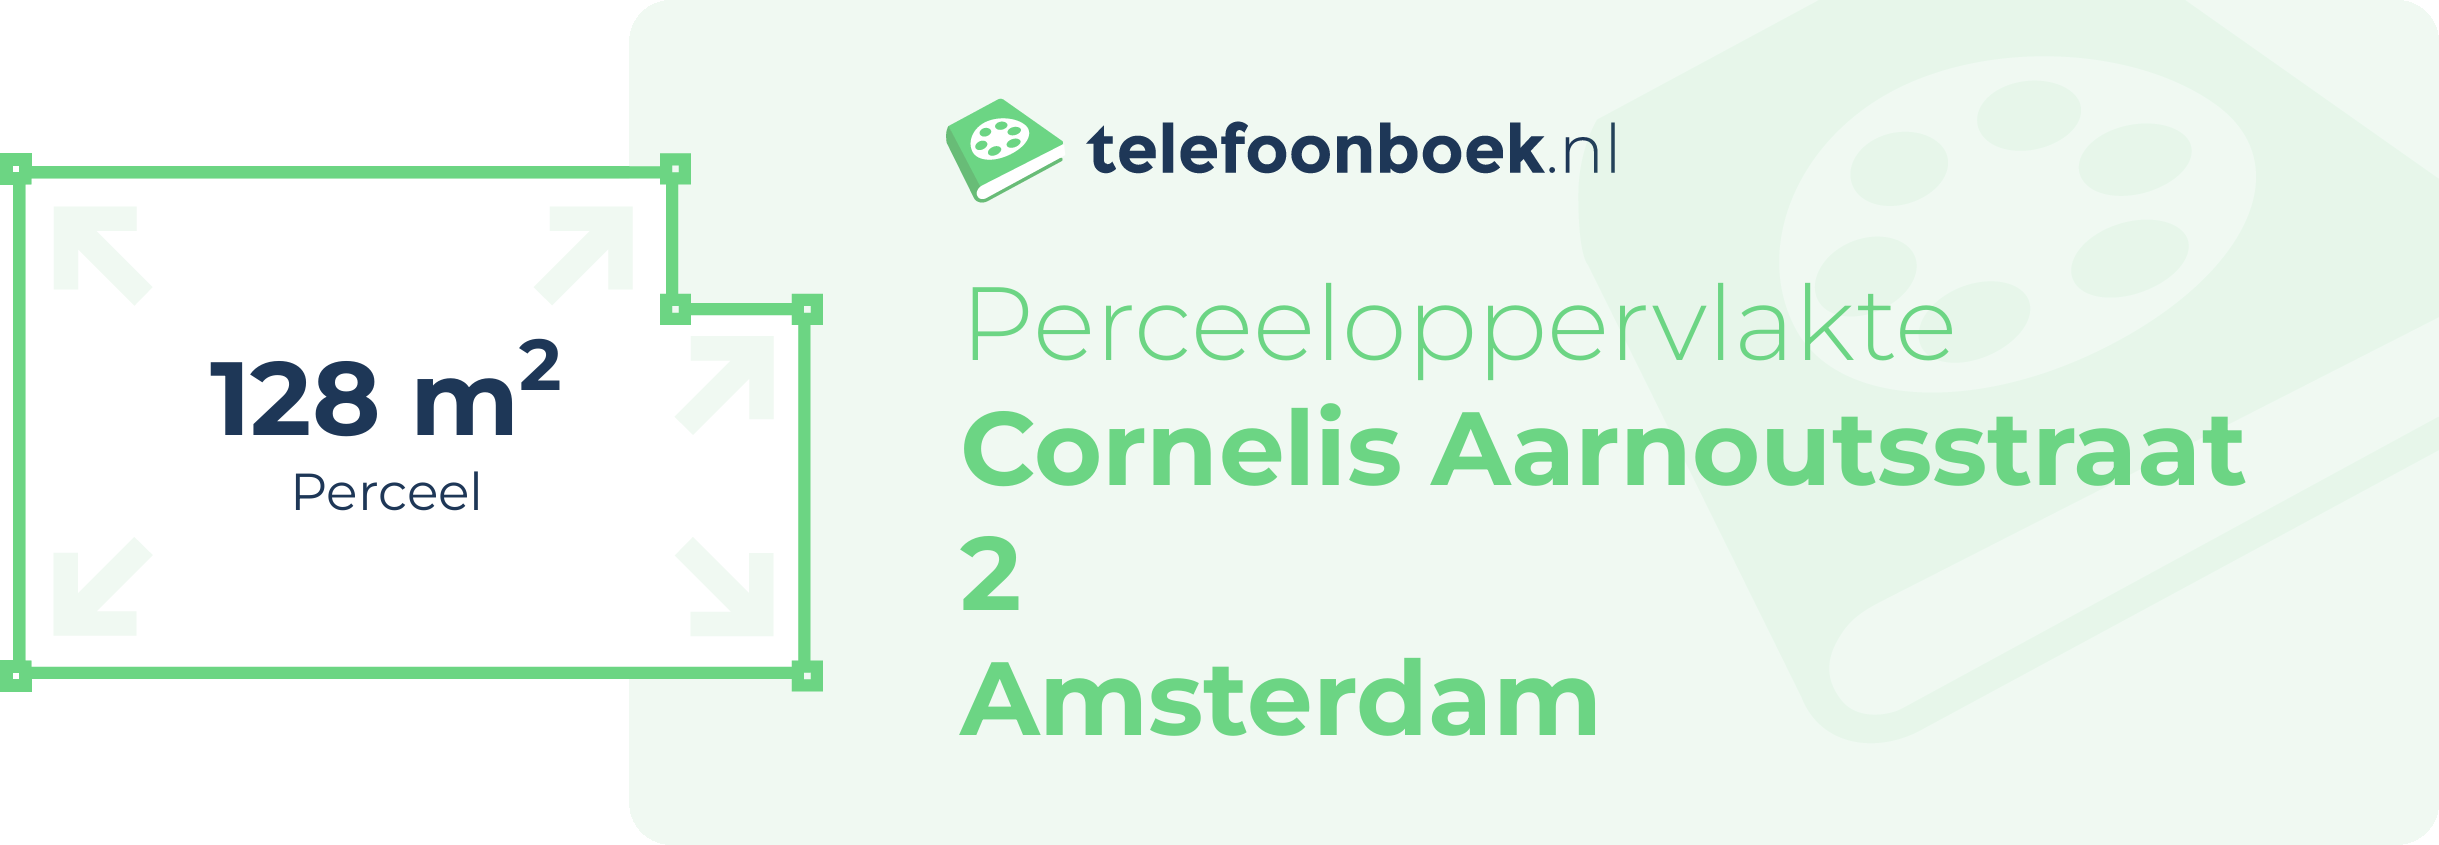 Perceeloppervlakte Cornelis Aarnoutsstraat 2 Amsterdam